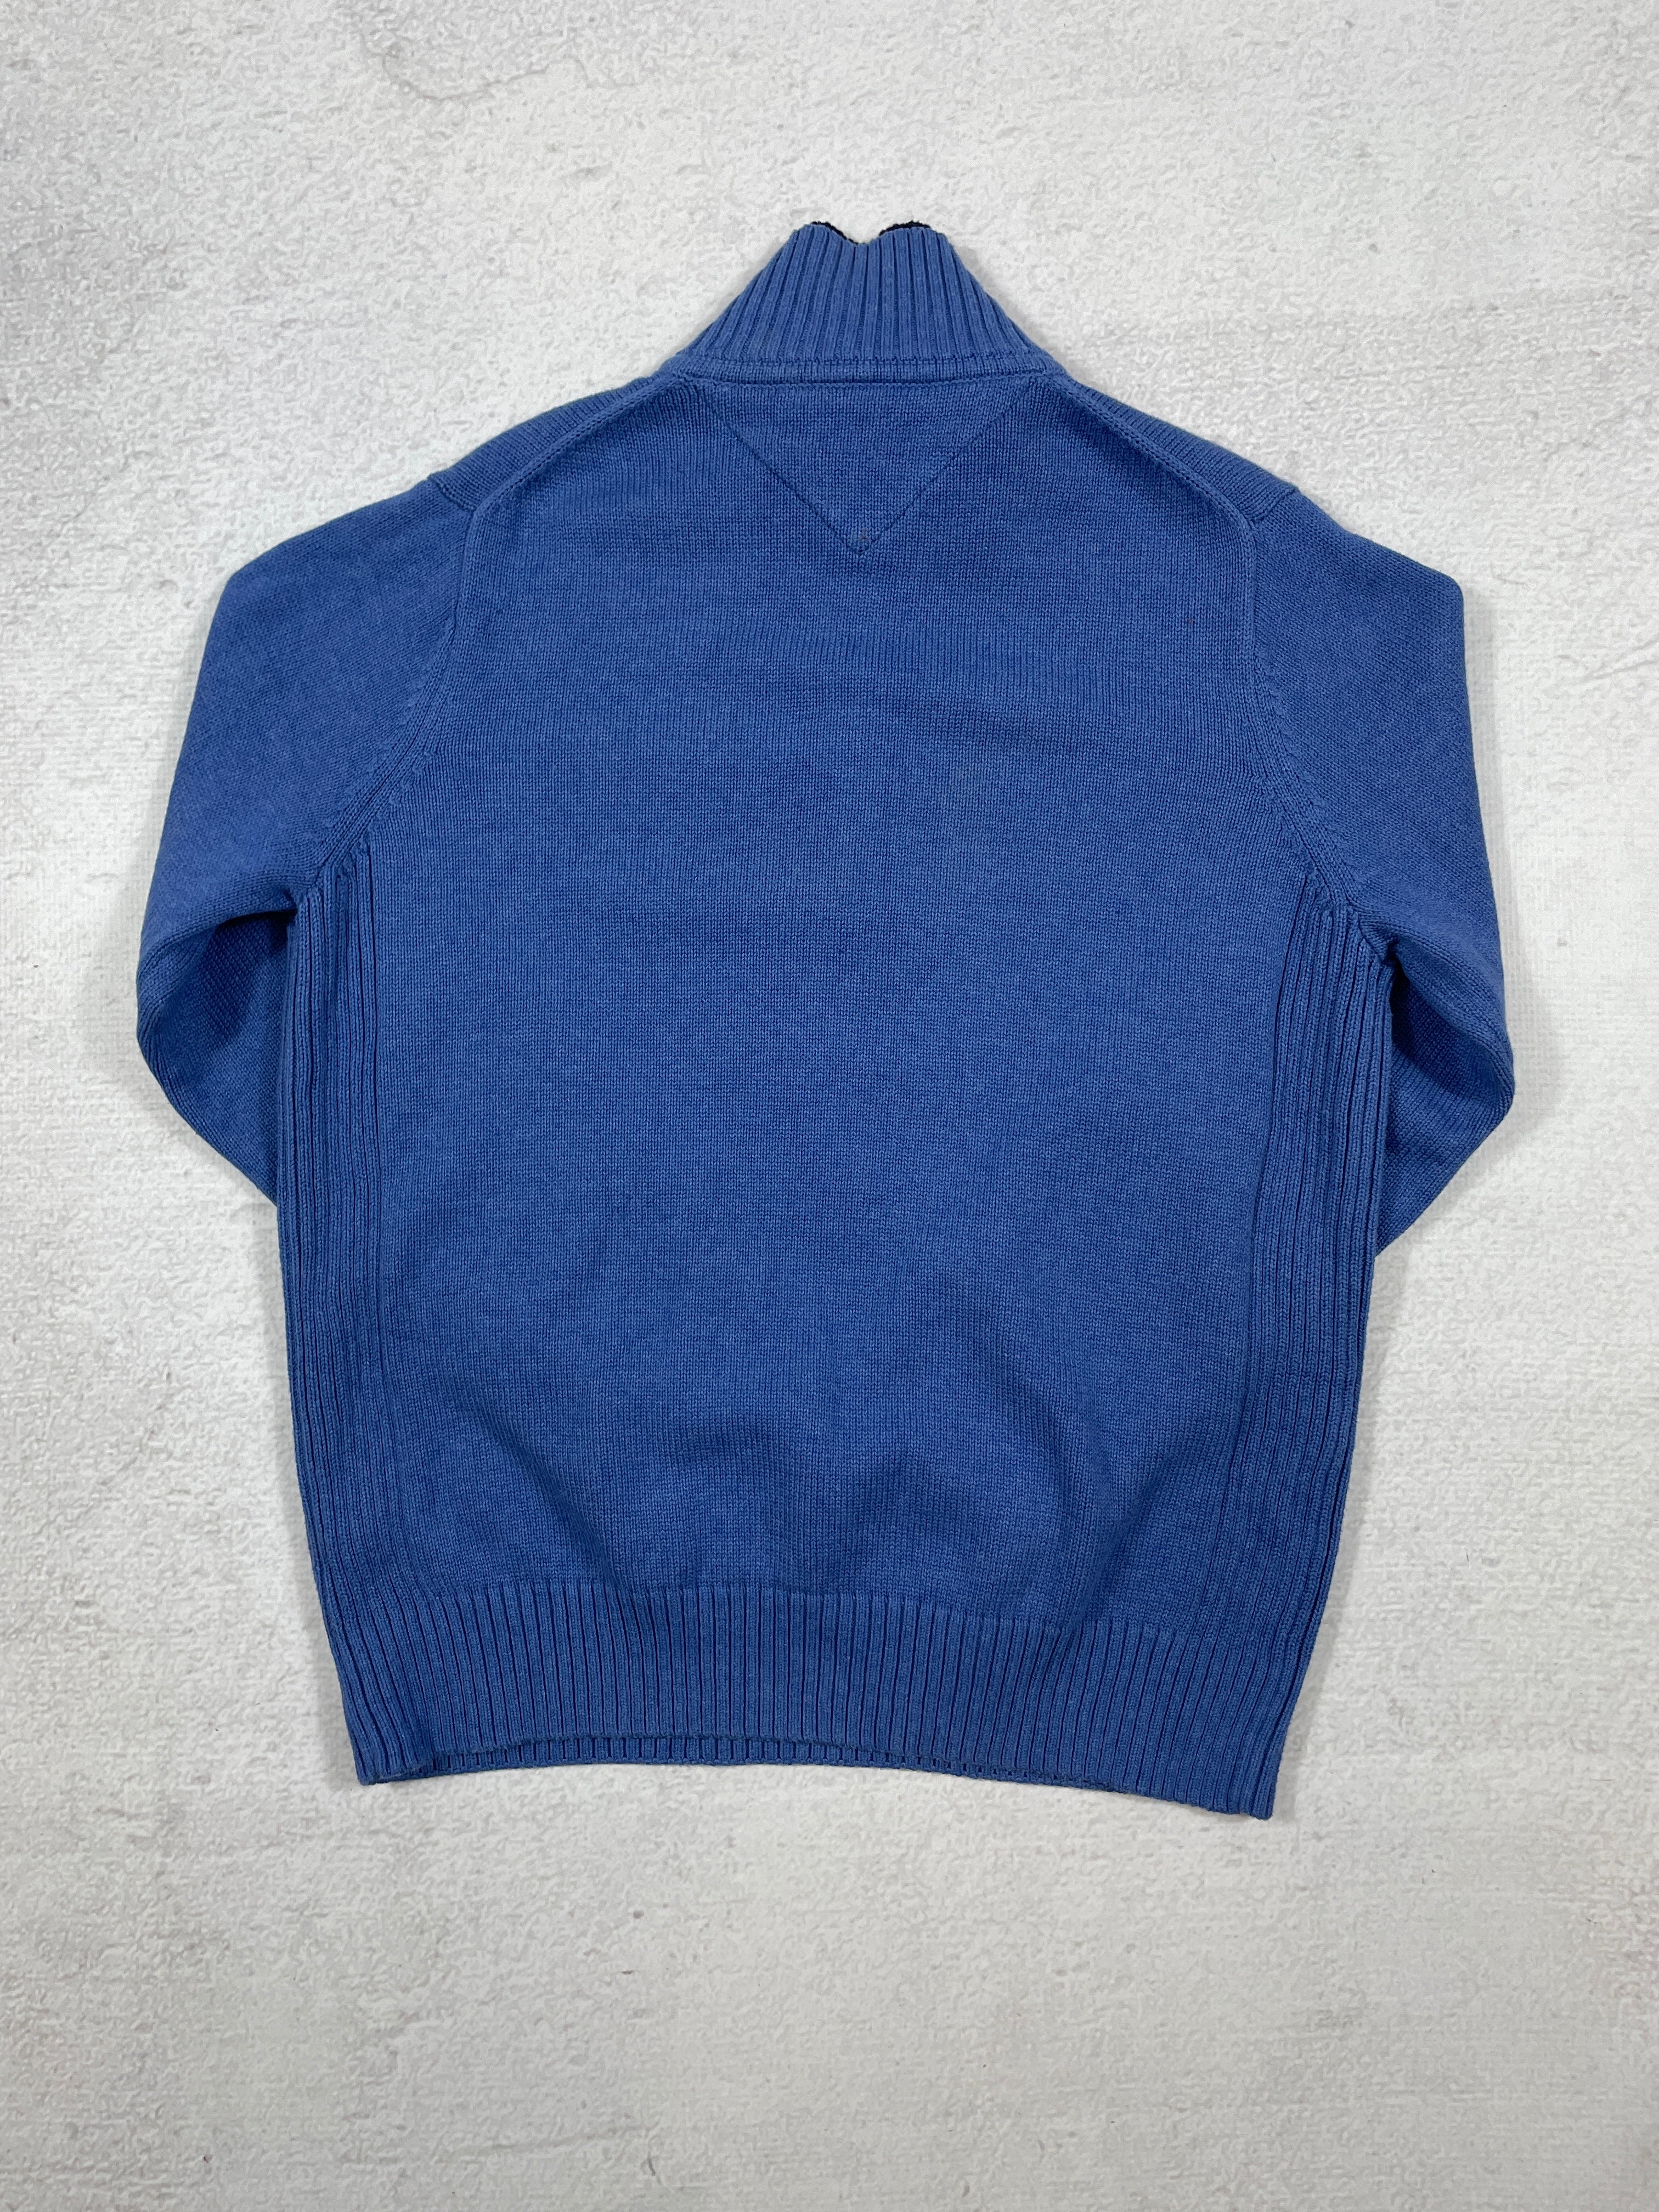 Vintage Tommy Hilfiger 1/4 Zip Knit Sweater - Men's Medium